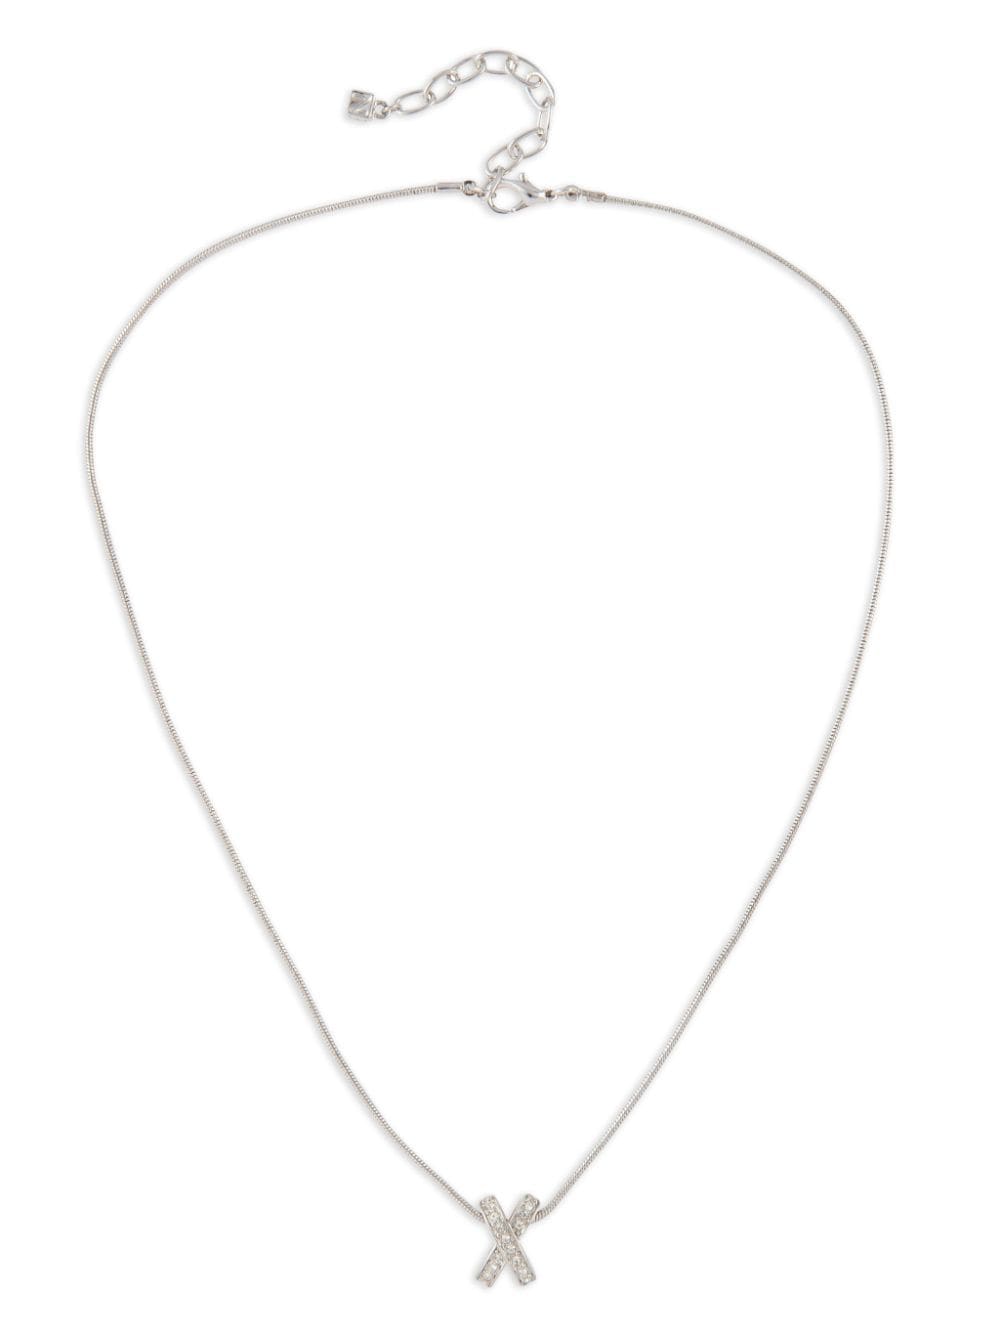 Nina Ricci 1990s pre-owned rhodium-plated necklace - Silver von Nina Ricci